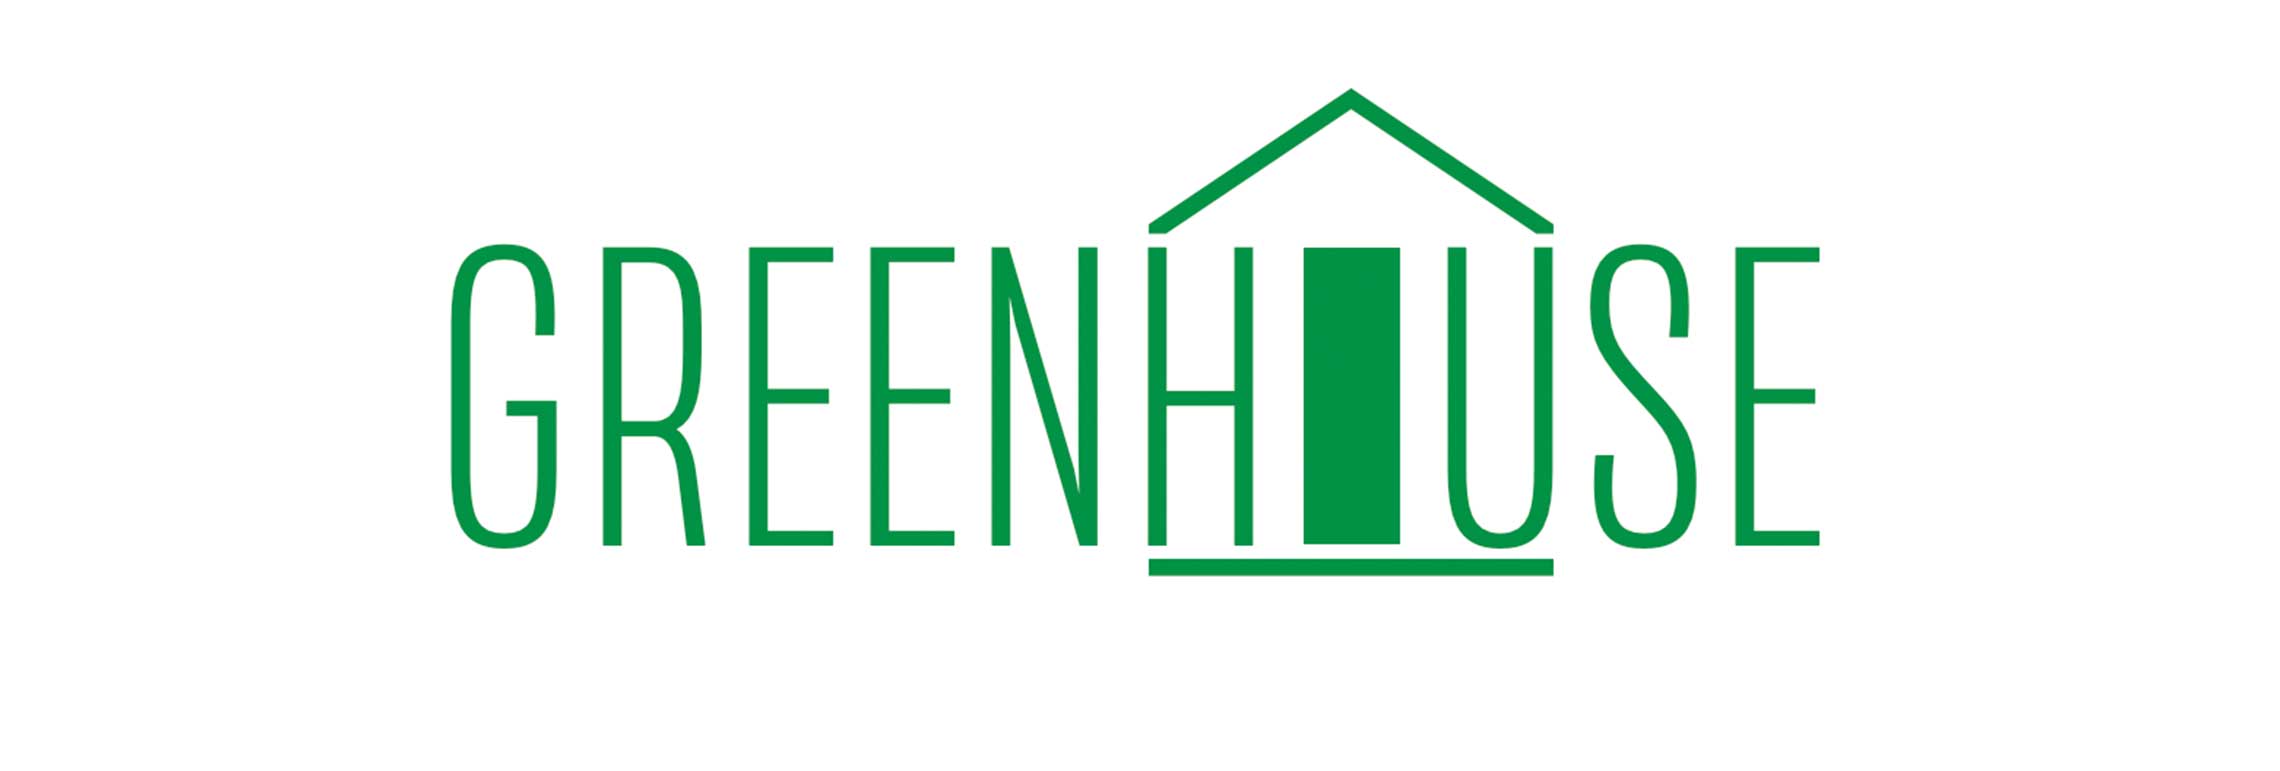 Greenhouse Registration Header